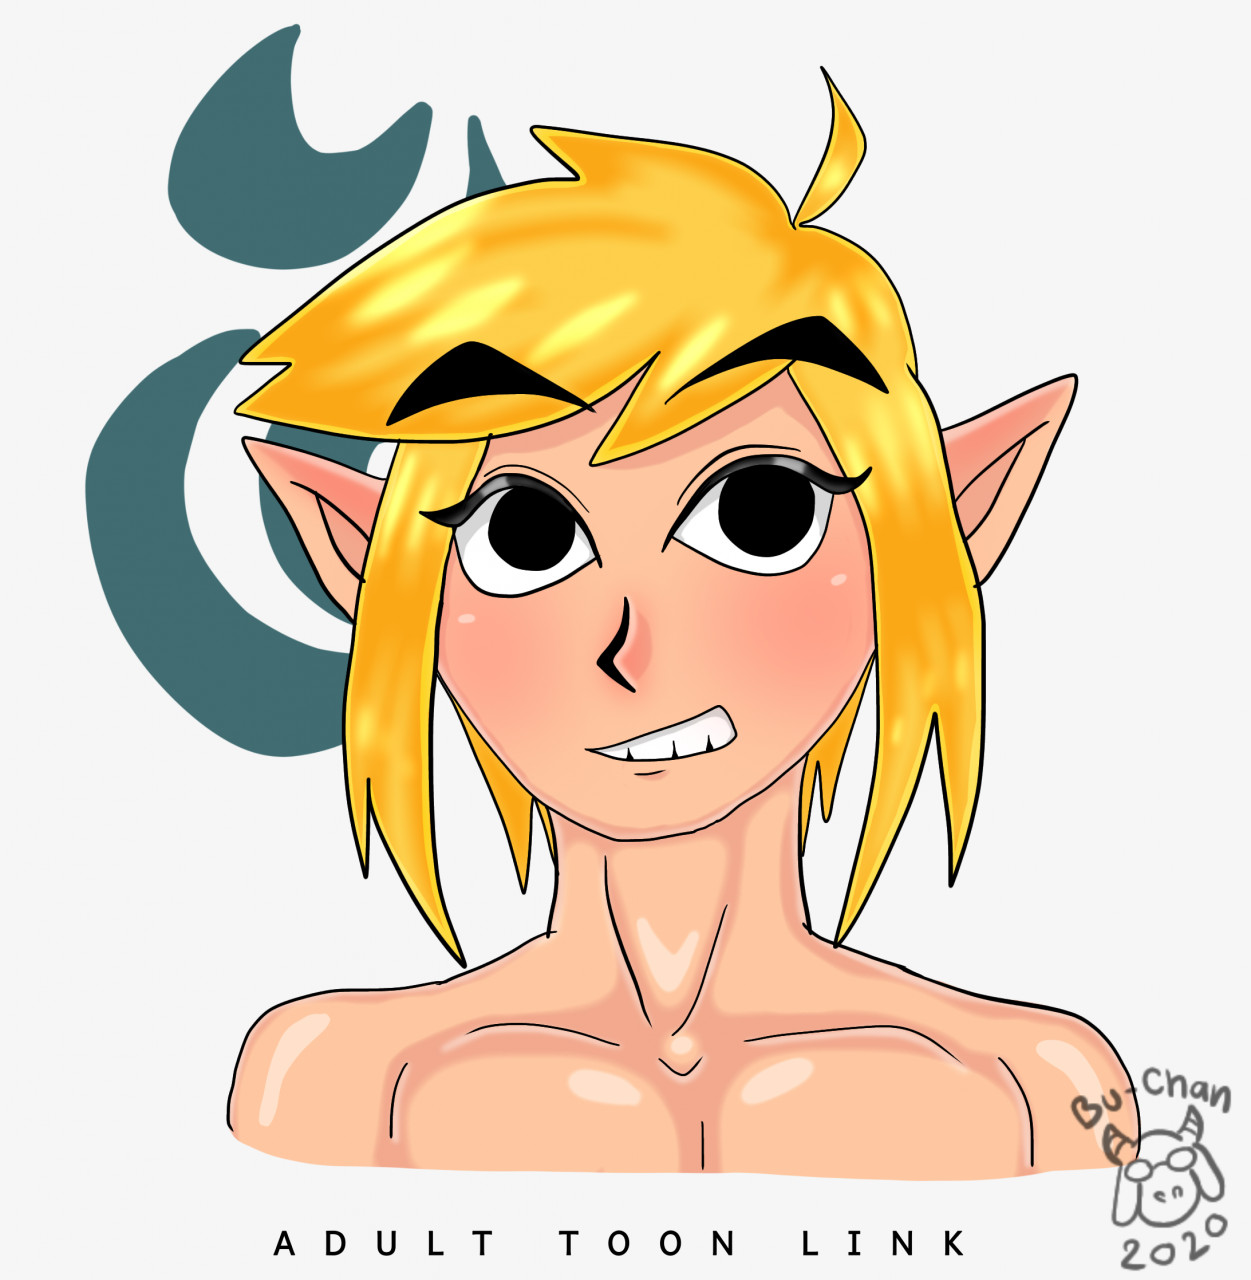 Adult toon link